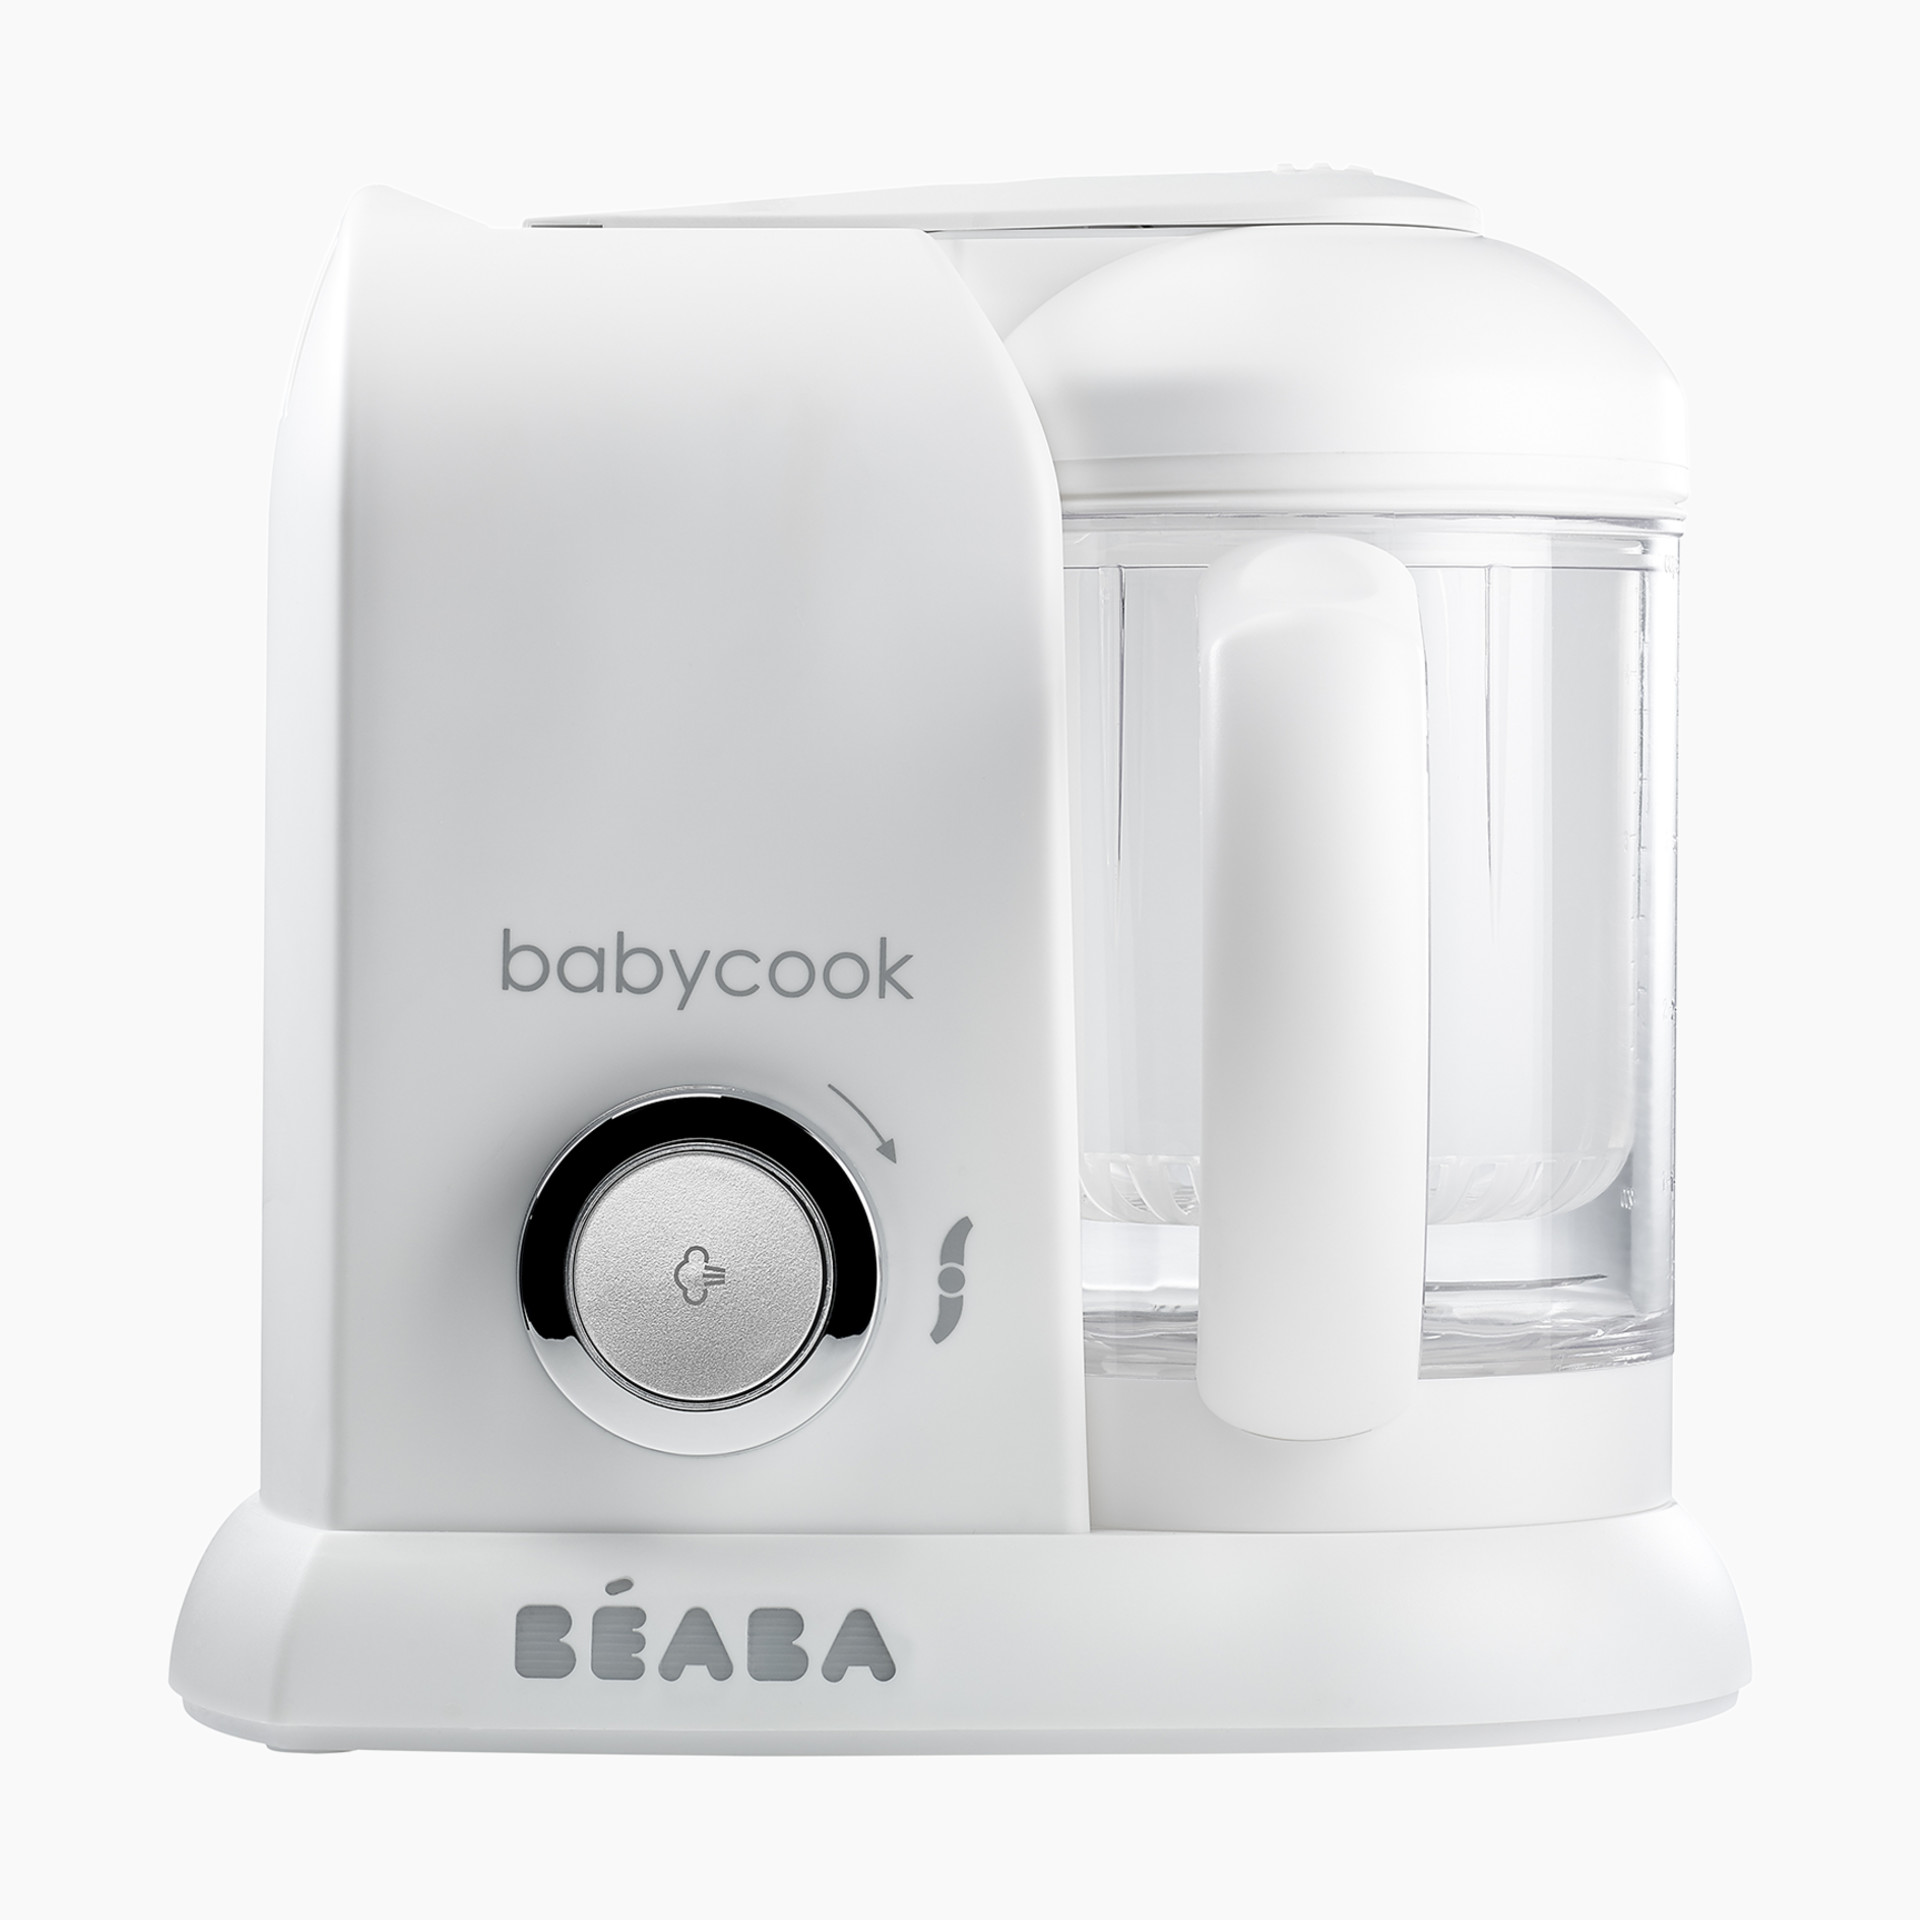 Beaba Babycook Solo Baby Food Maker - White